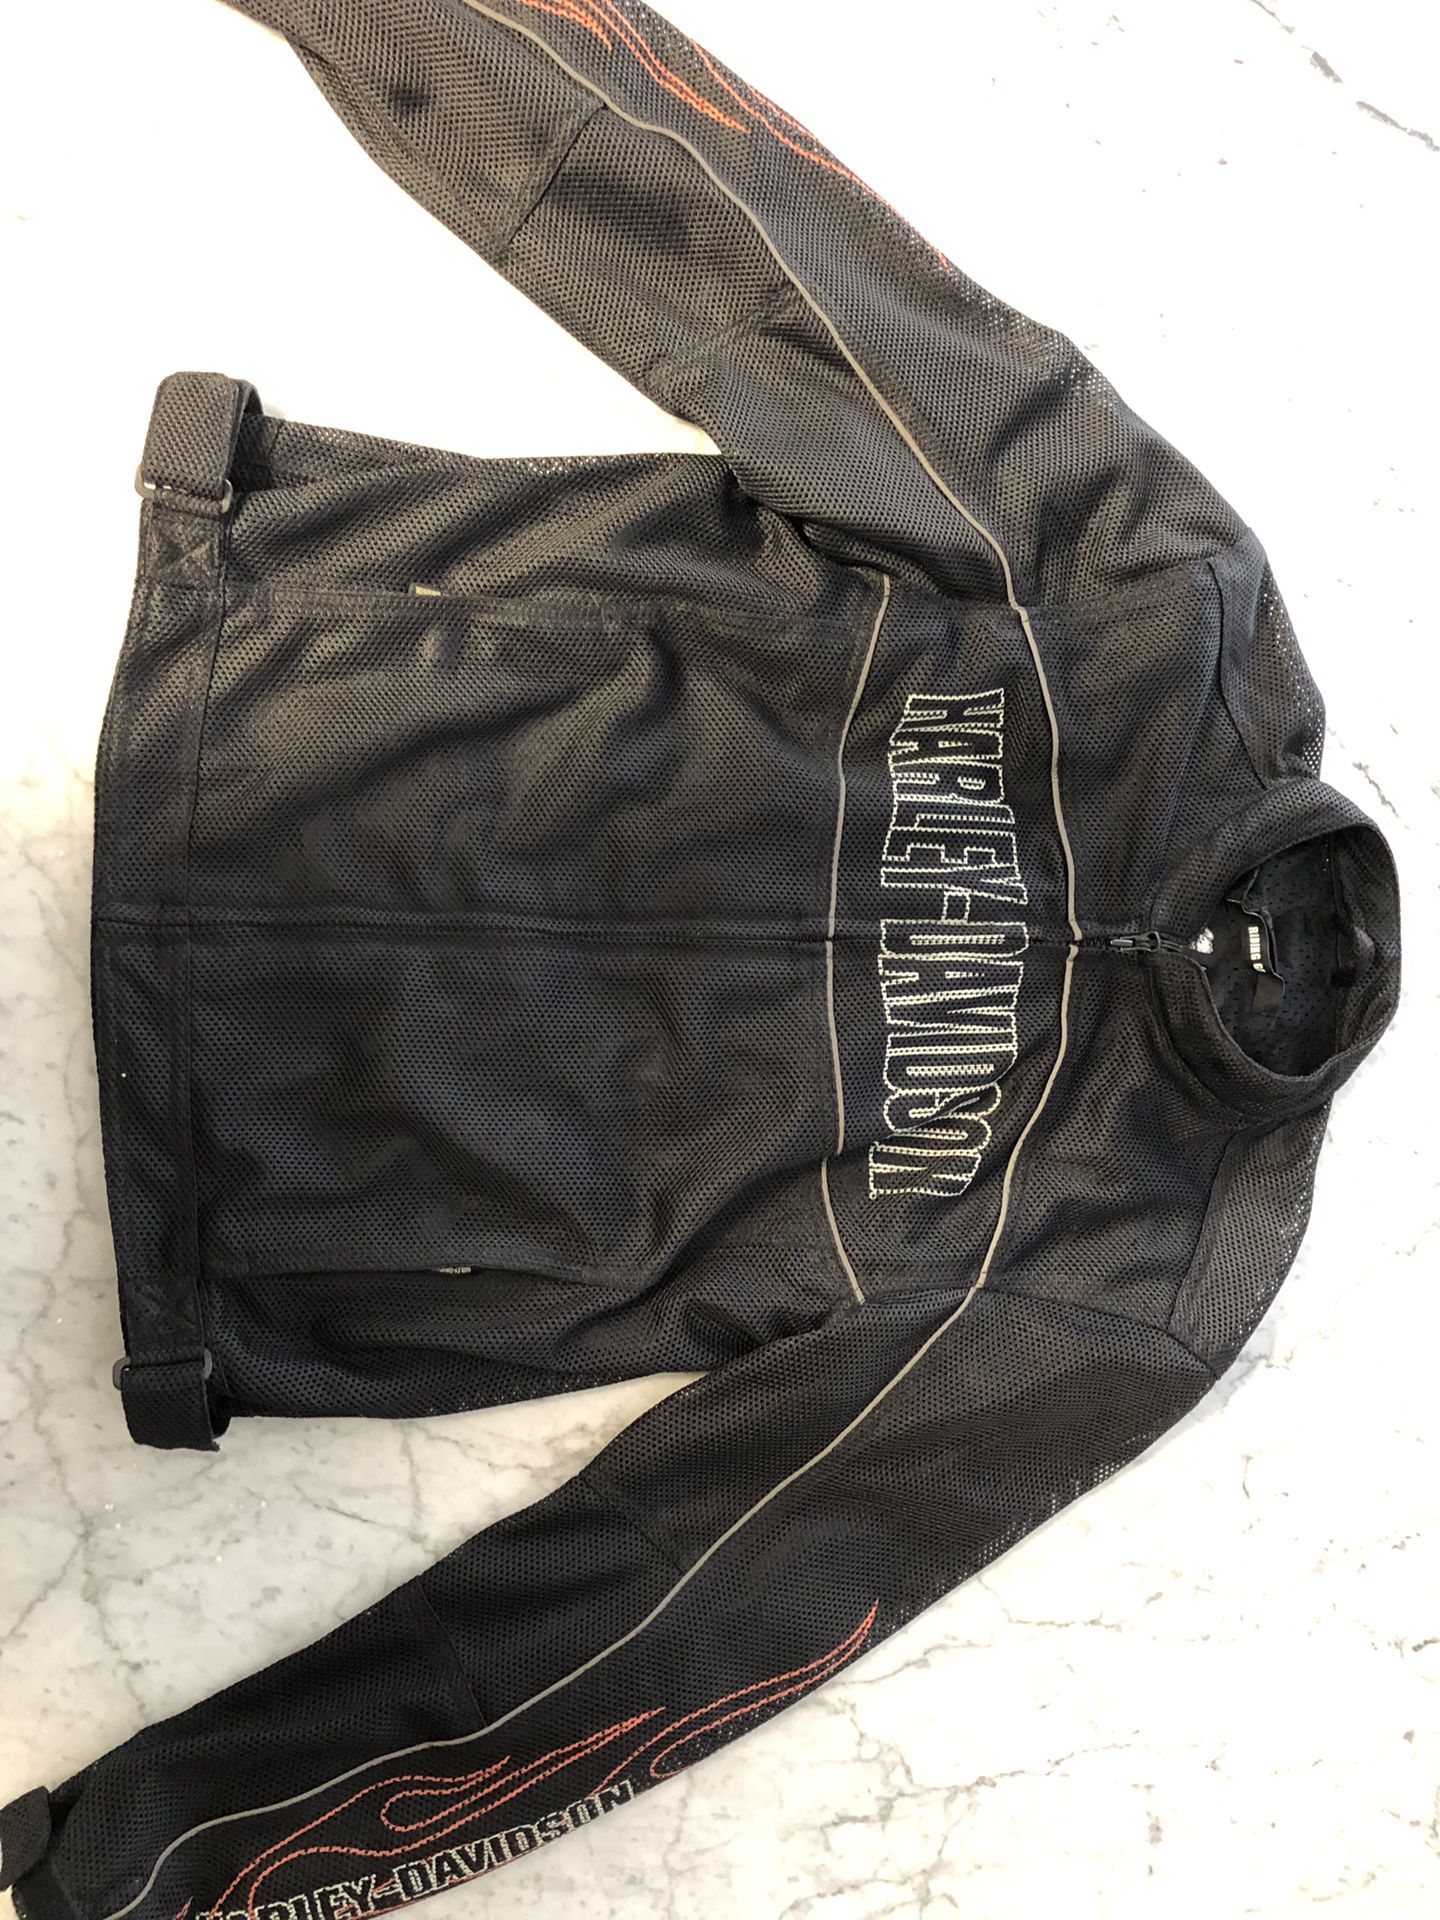 Harley Davidson motorcycle jacket